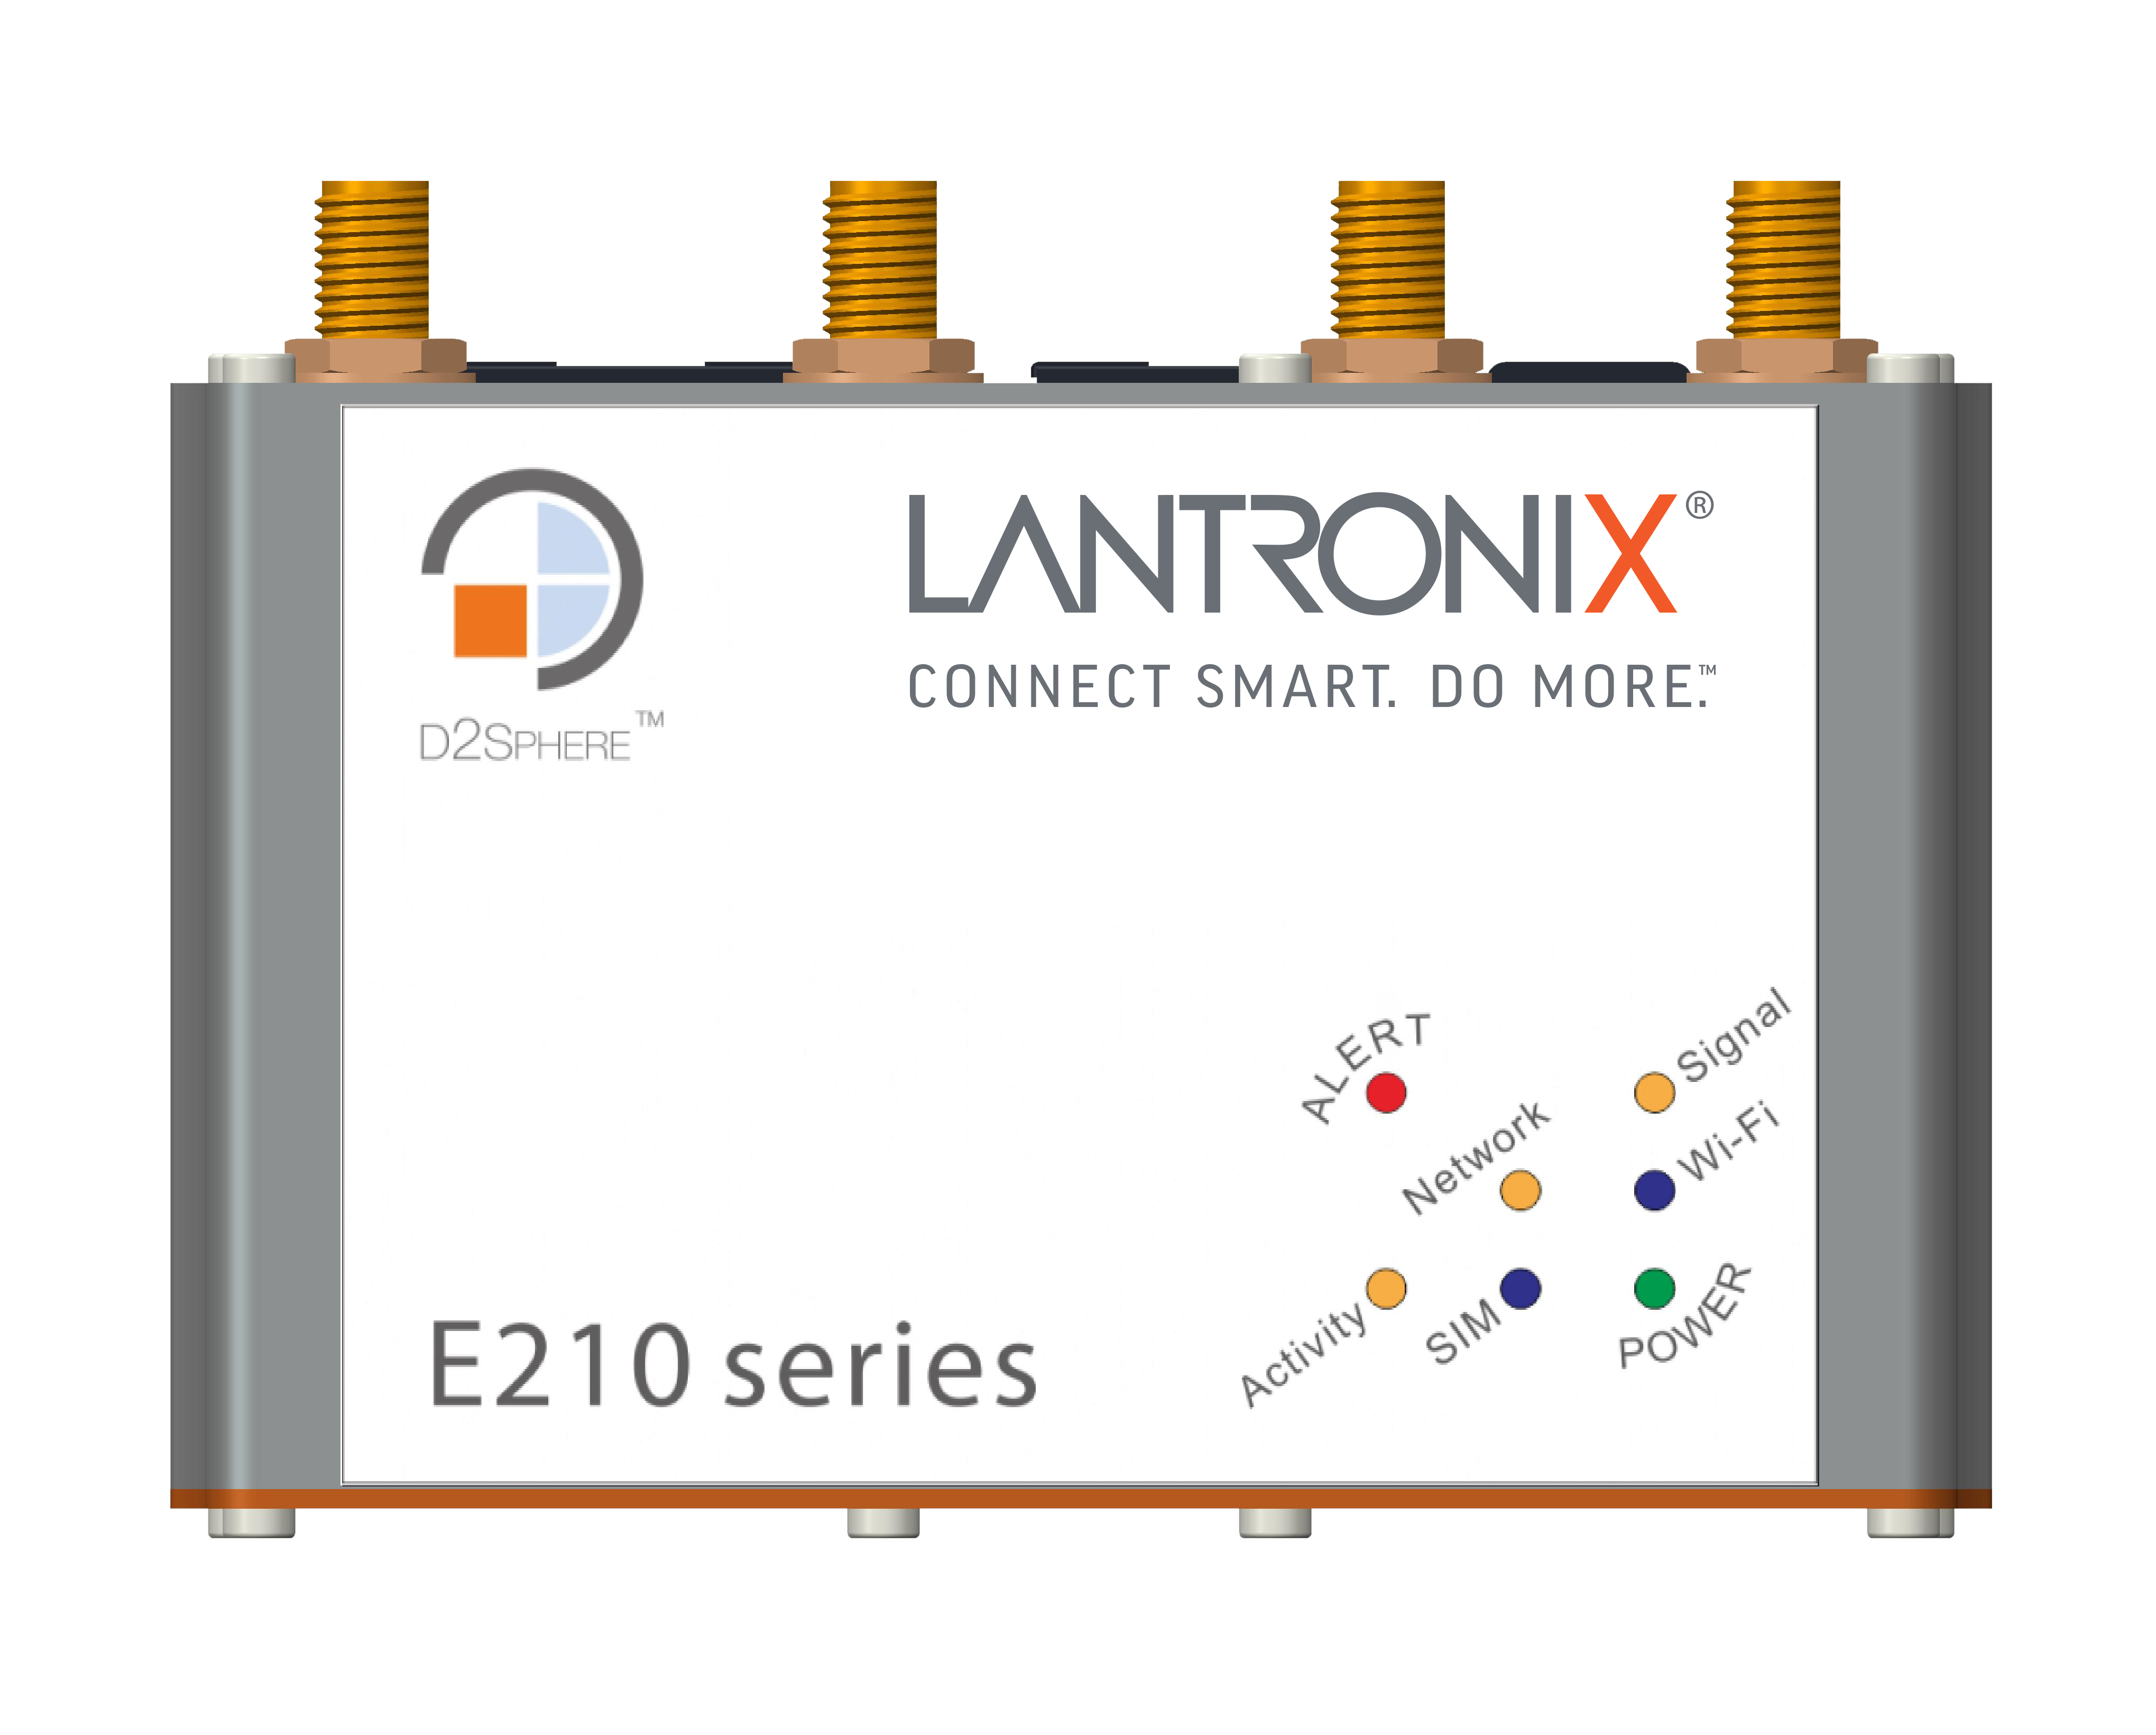 Lantronix E210 Series Routers